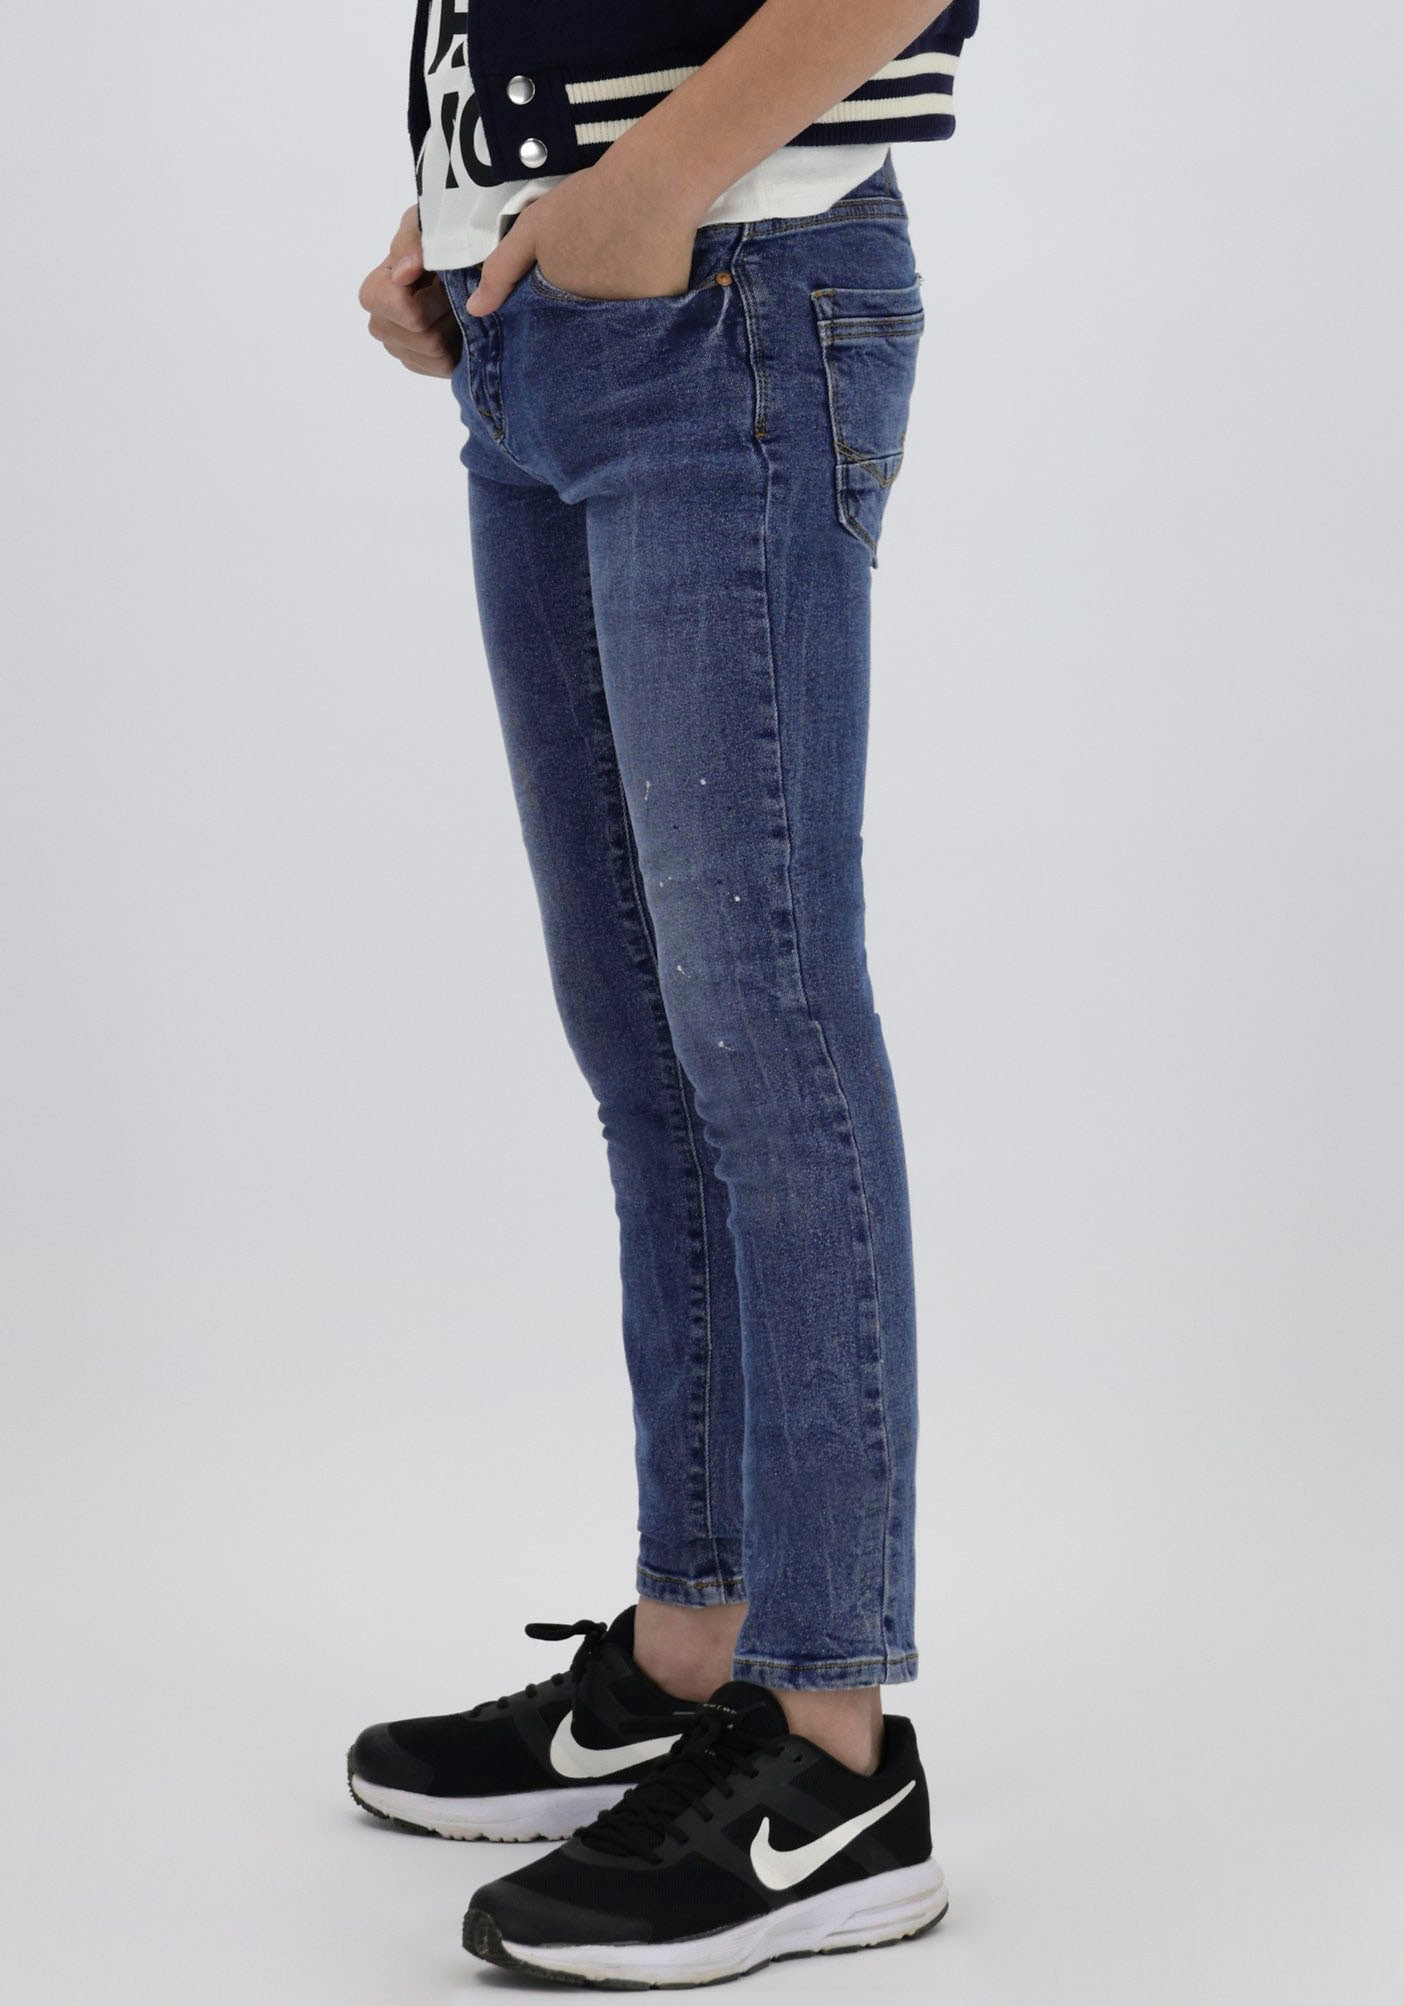 LTB Skinny-fit-Jeans »RAFIEL«, mit Farbflecken, für BOYS